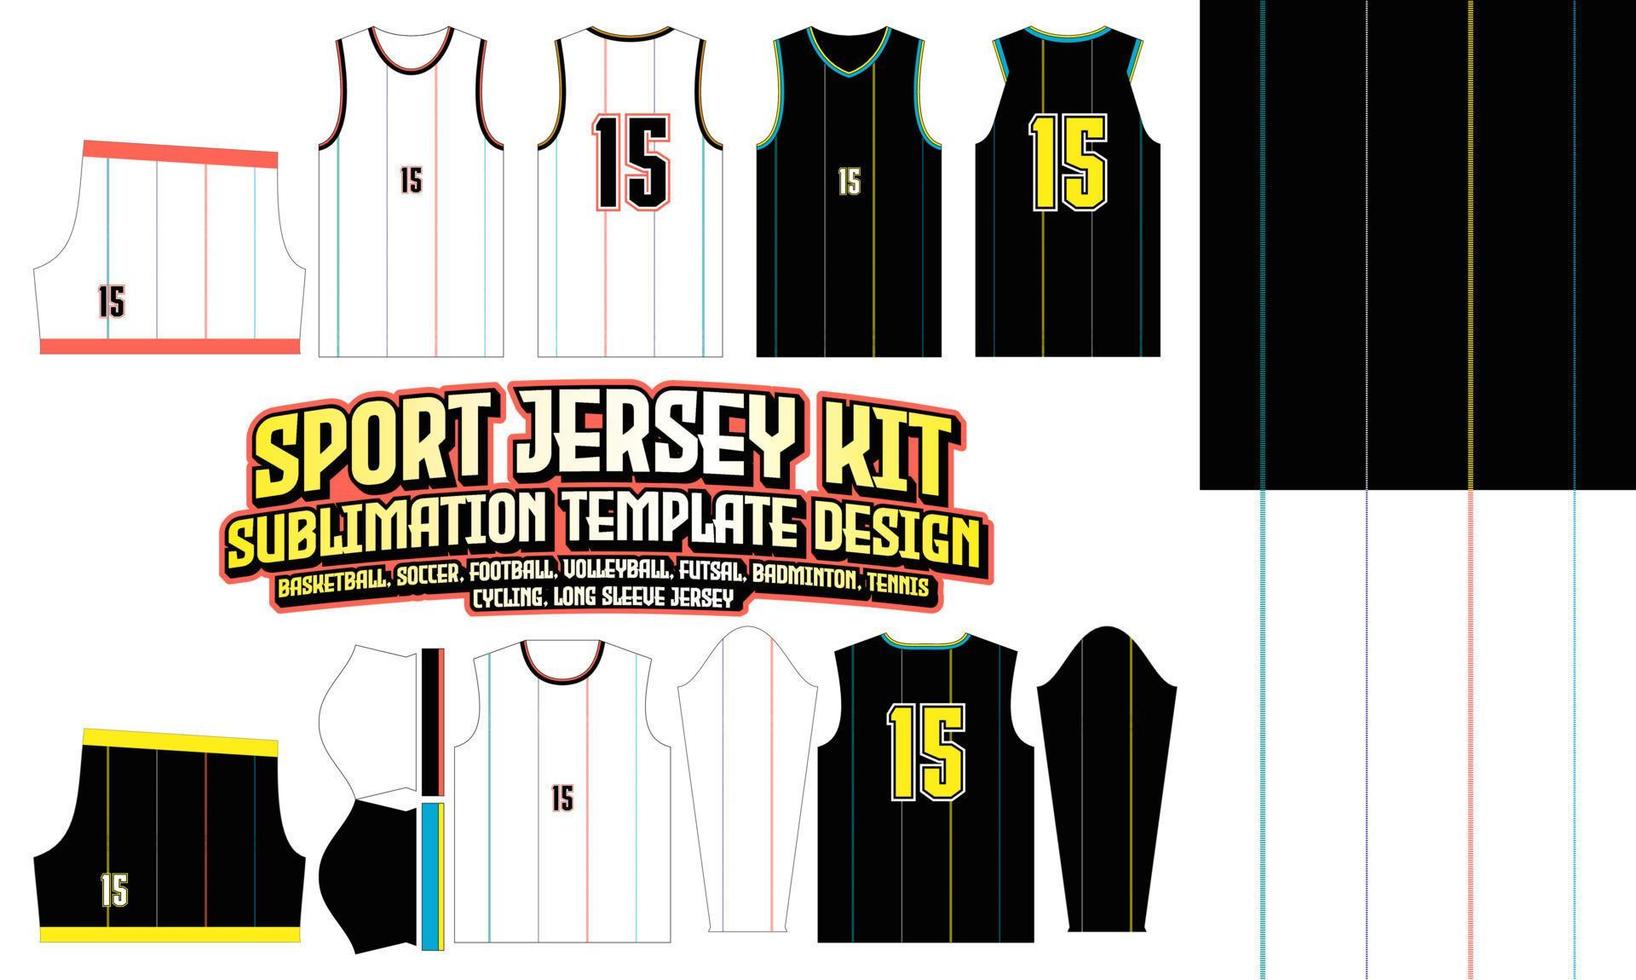 rayure jersey vêtements sport porter sublimation motif conception 182 pour le football football e-sport basket-ball volley-ball badminton futsal t-shirt vecteur